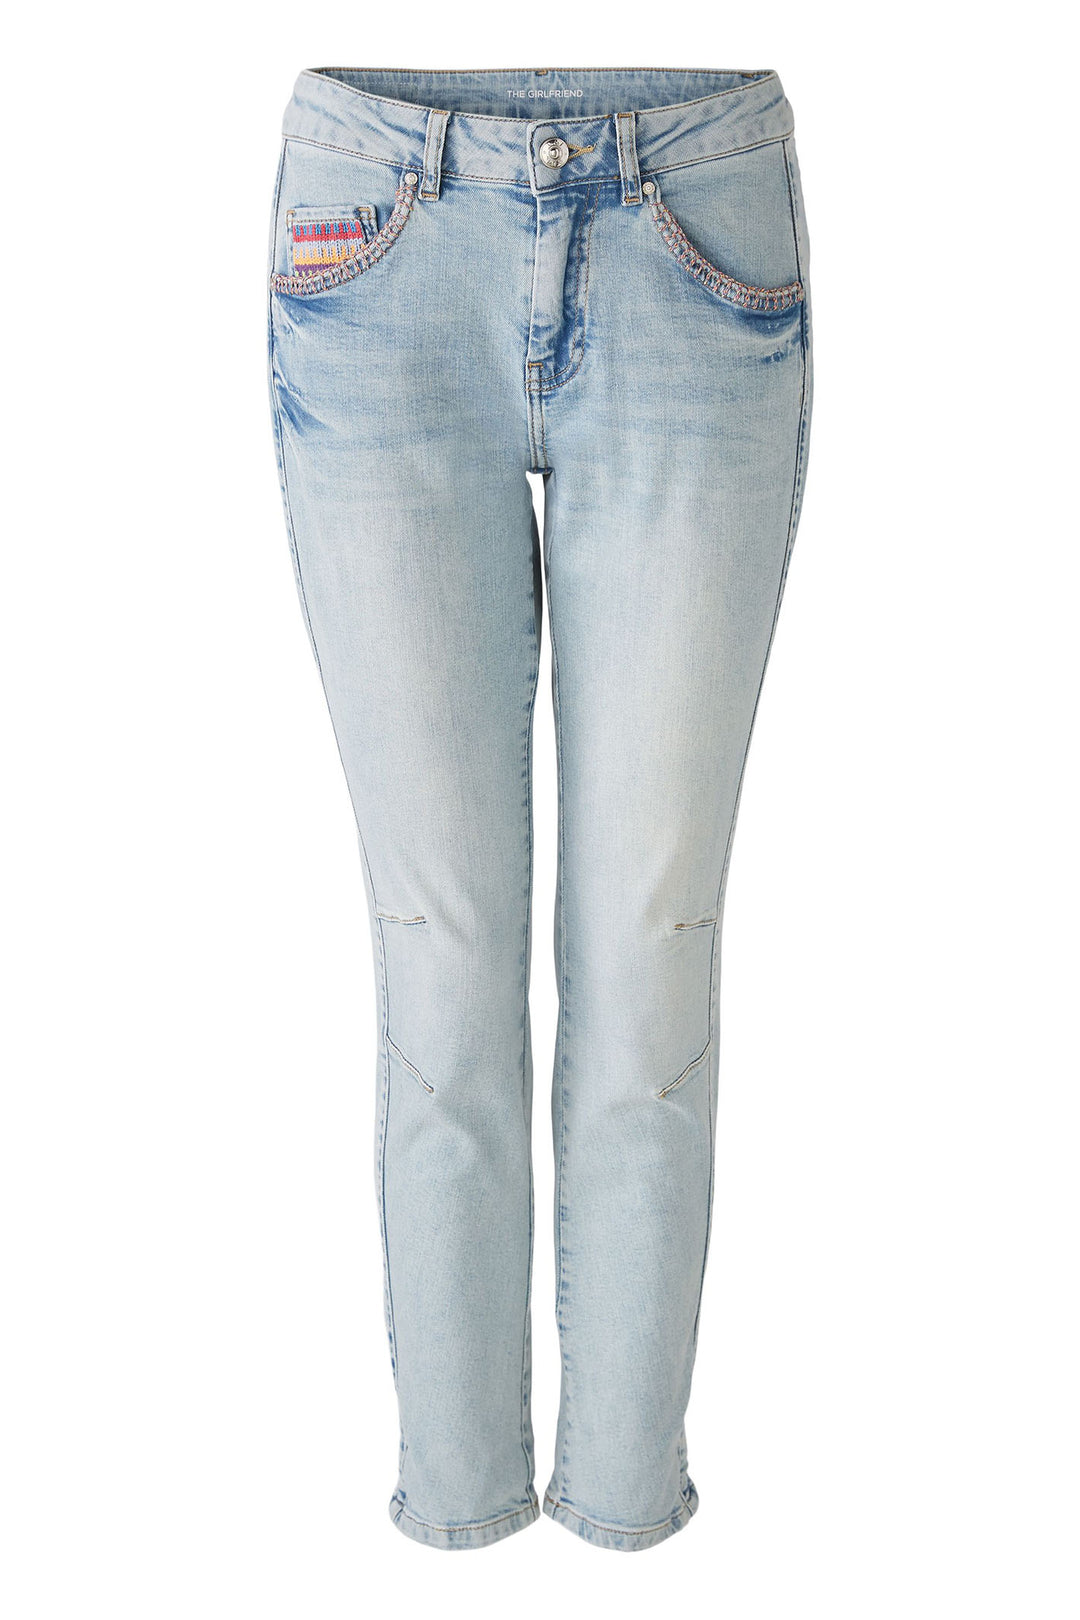 Oui 86805 Blue Denim Pre Fade Jeans - Olivia Grace Fashion